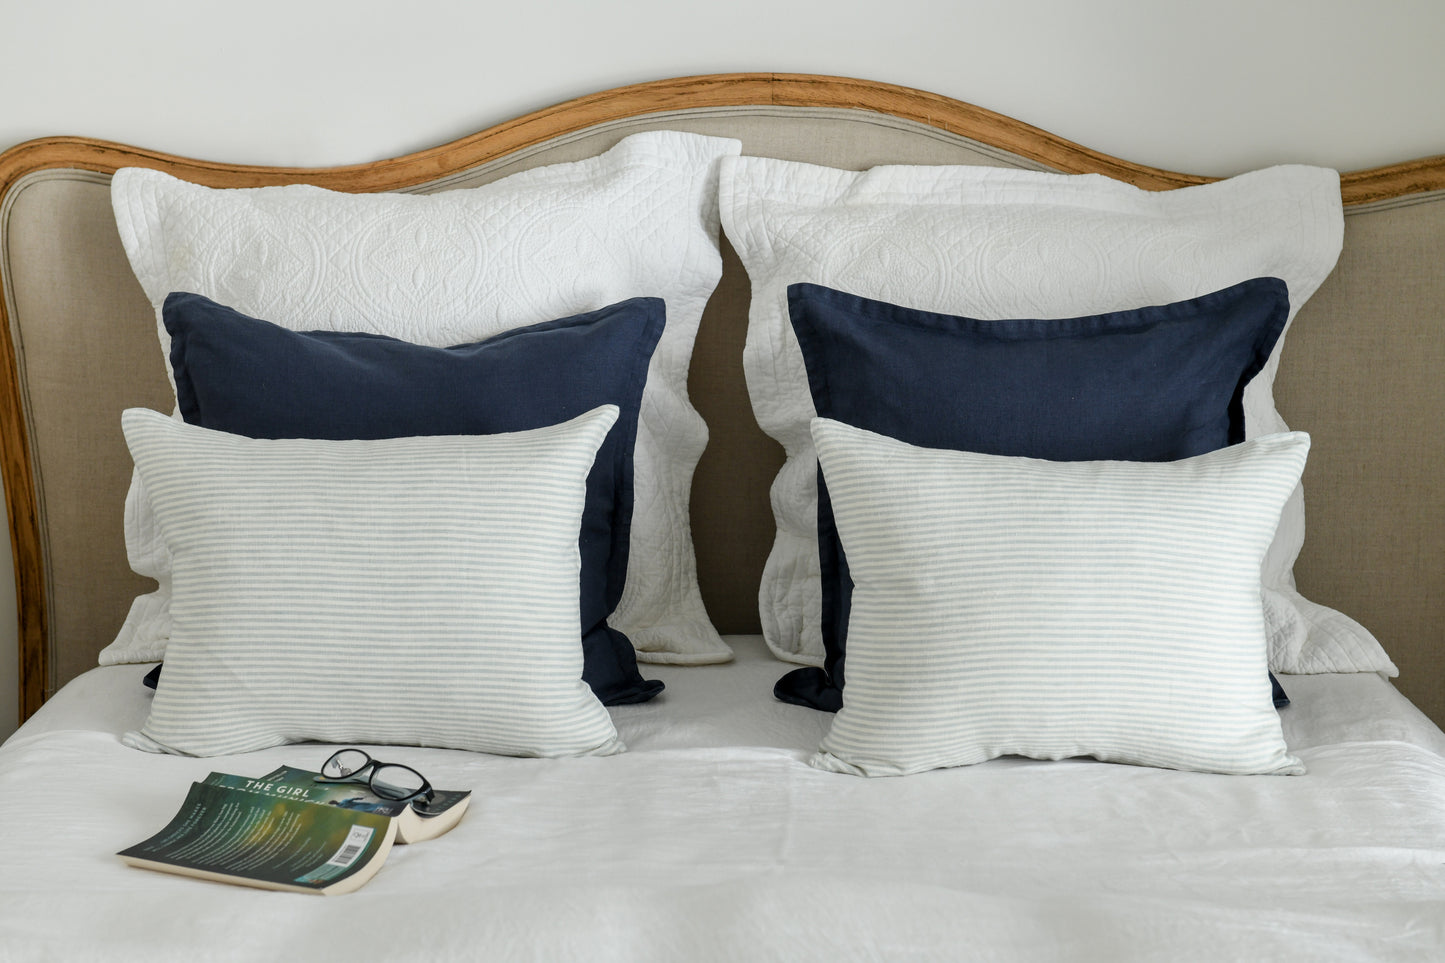 Classic Linen Cushion Navy